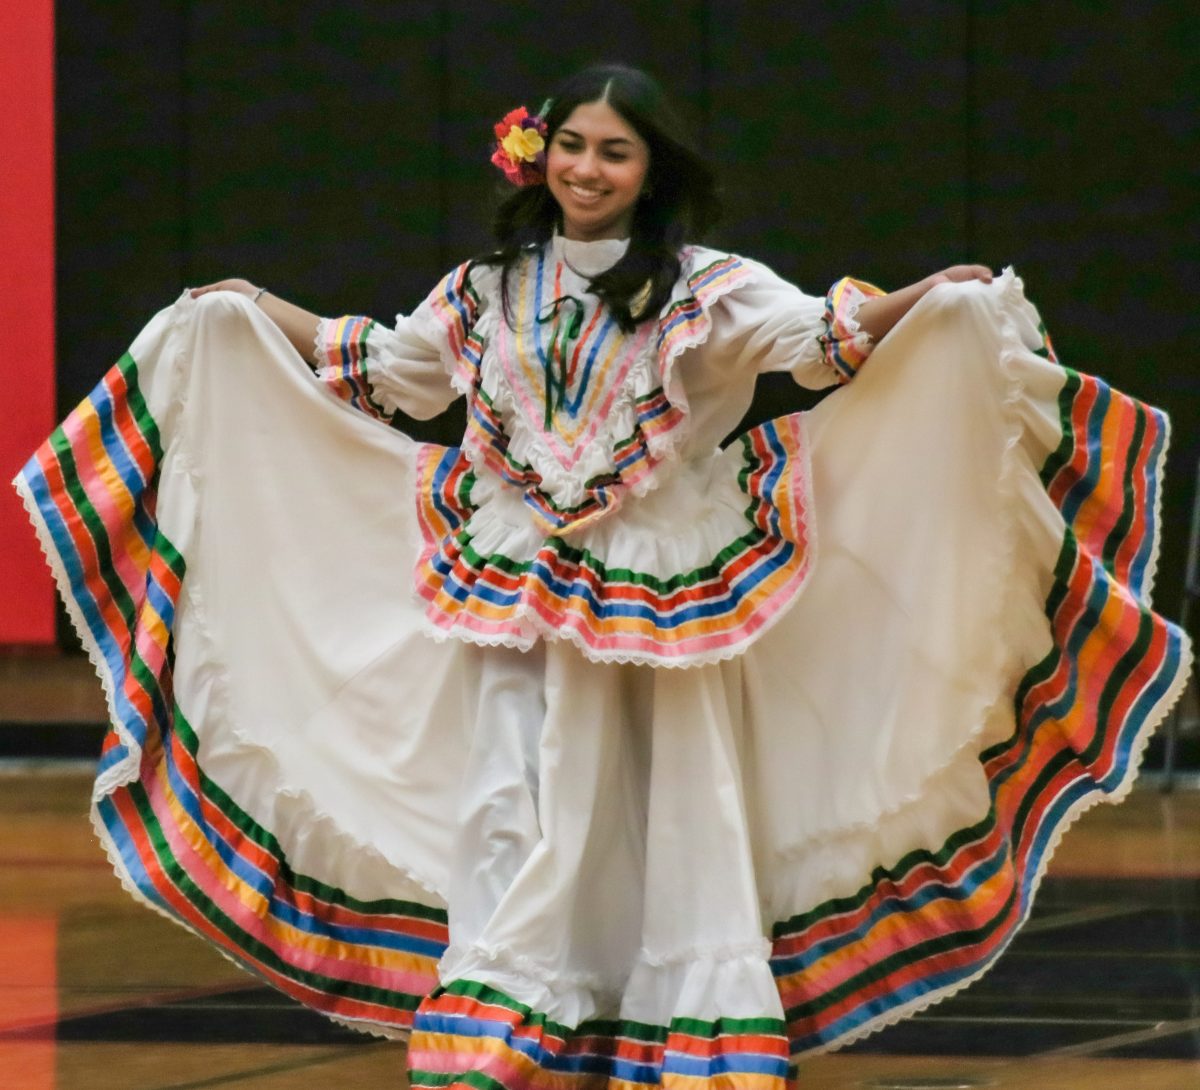 Yaretzi Ramirez Olivera displays a colorful Mexican huipil dress during the fashion show